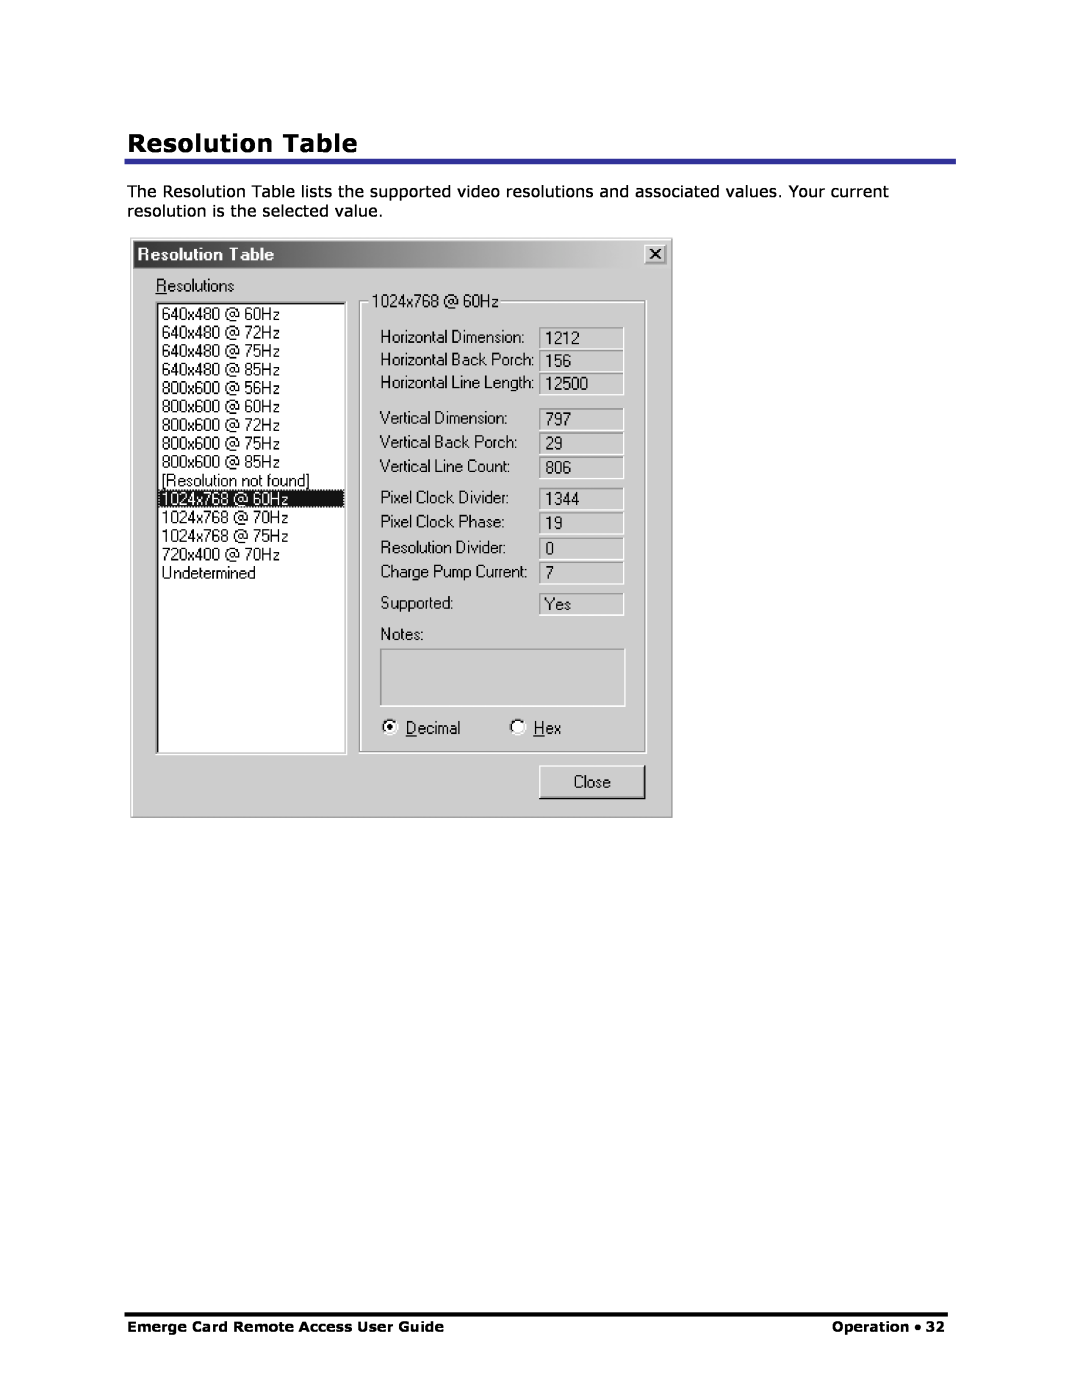 Apex Digital Apex EmergeCard Remote Access manual Resolution Table, Operation 